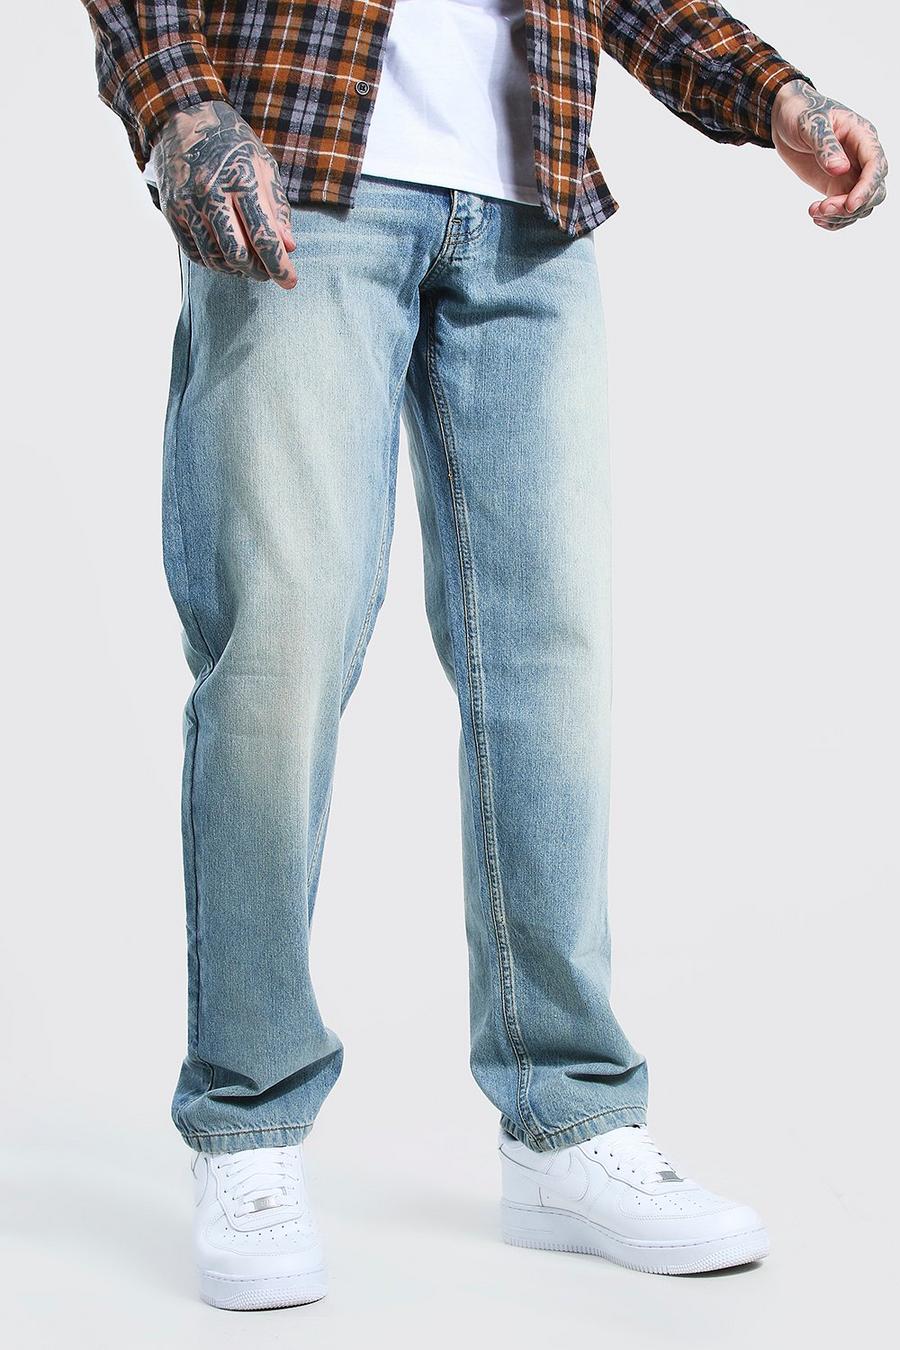 Lockere Jeans, Antikes blau